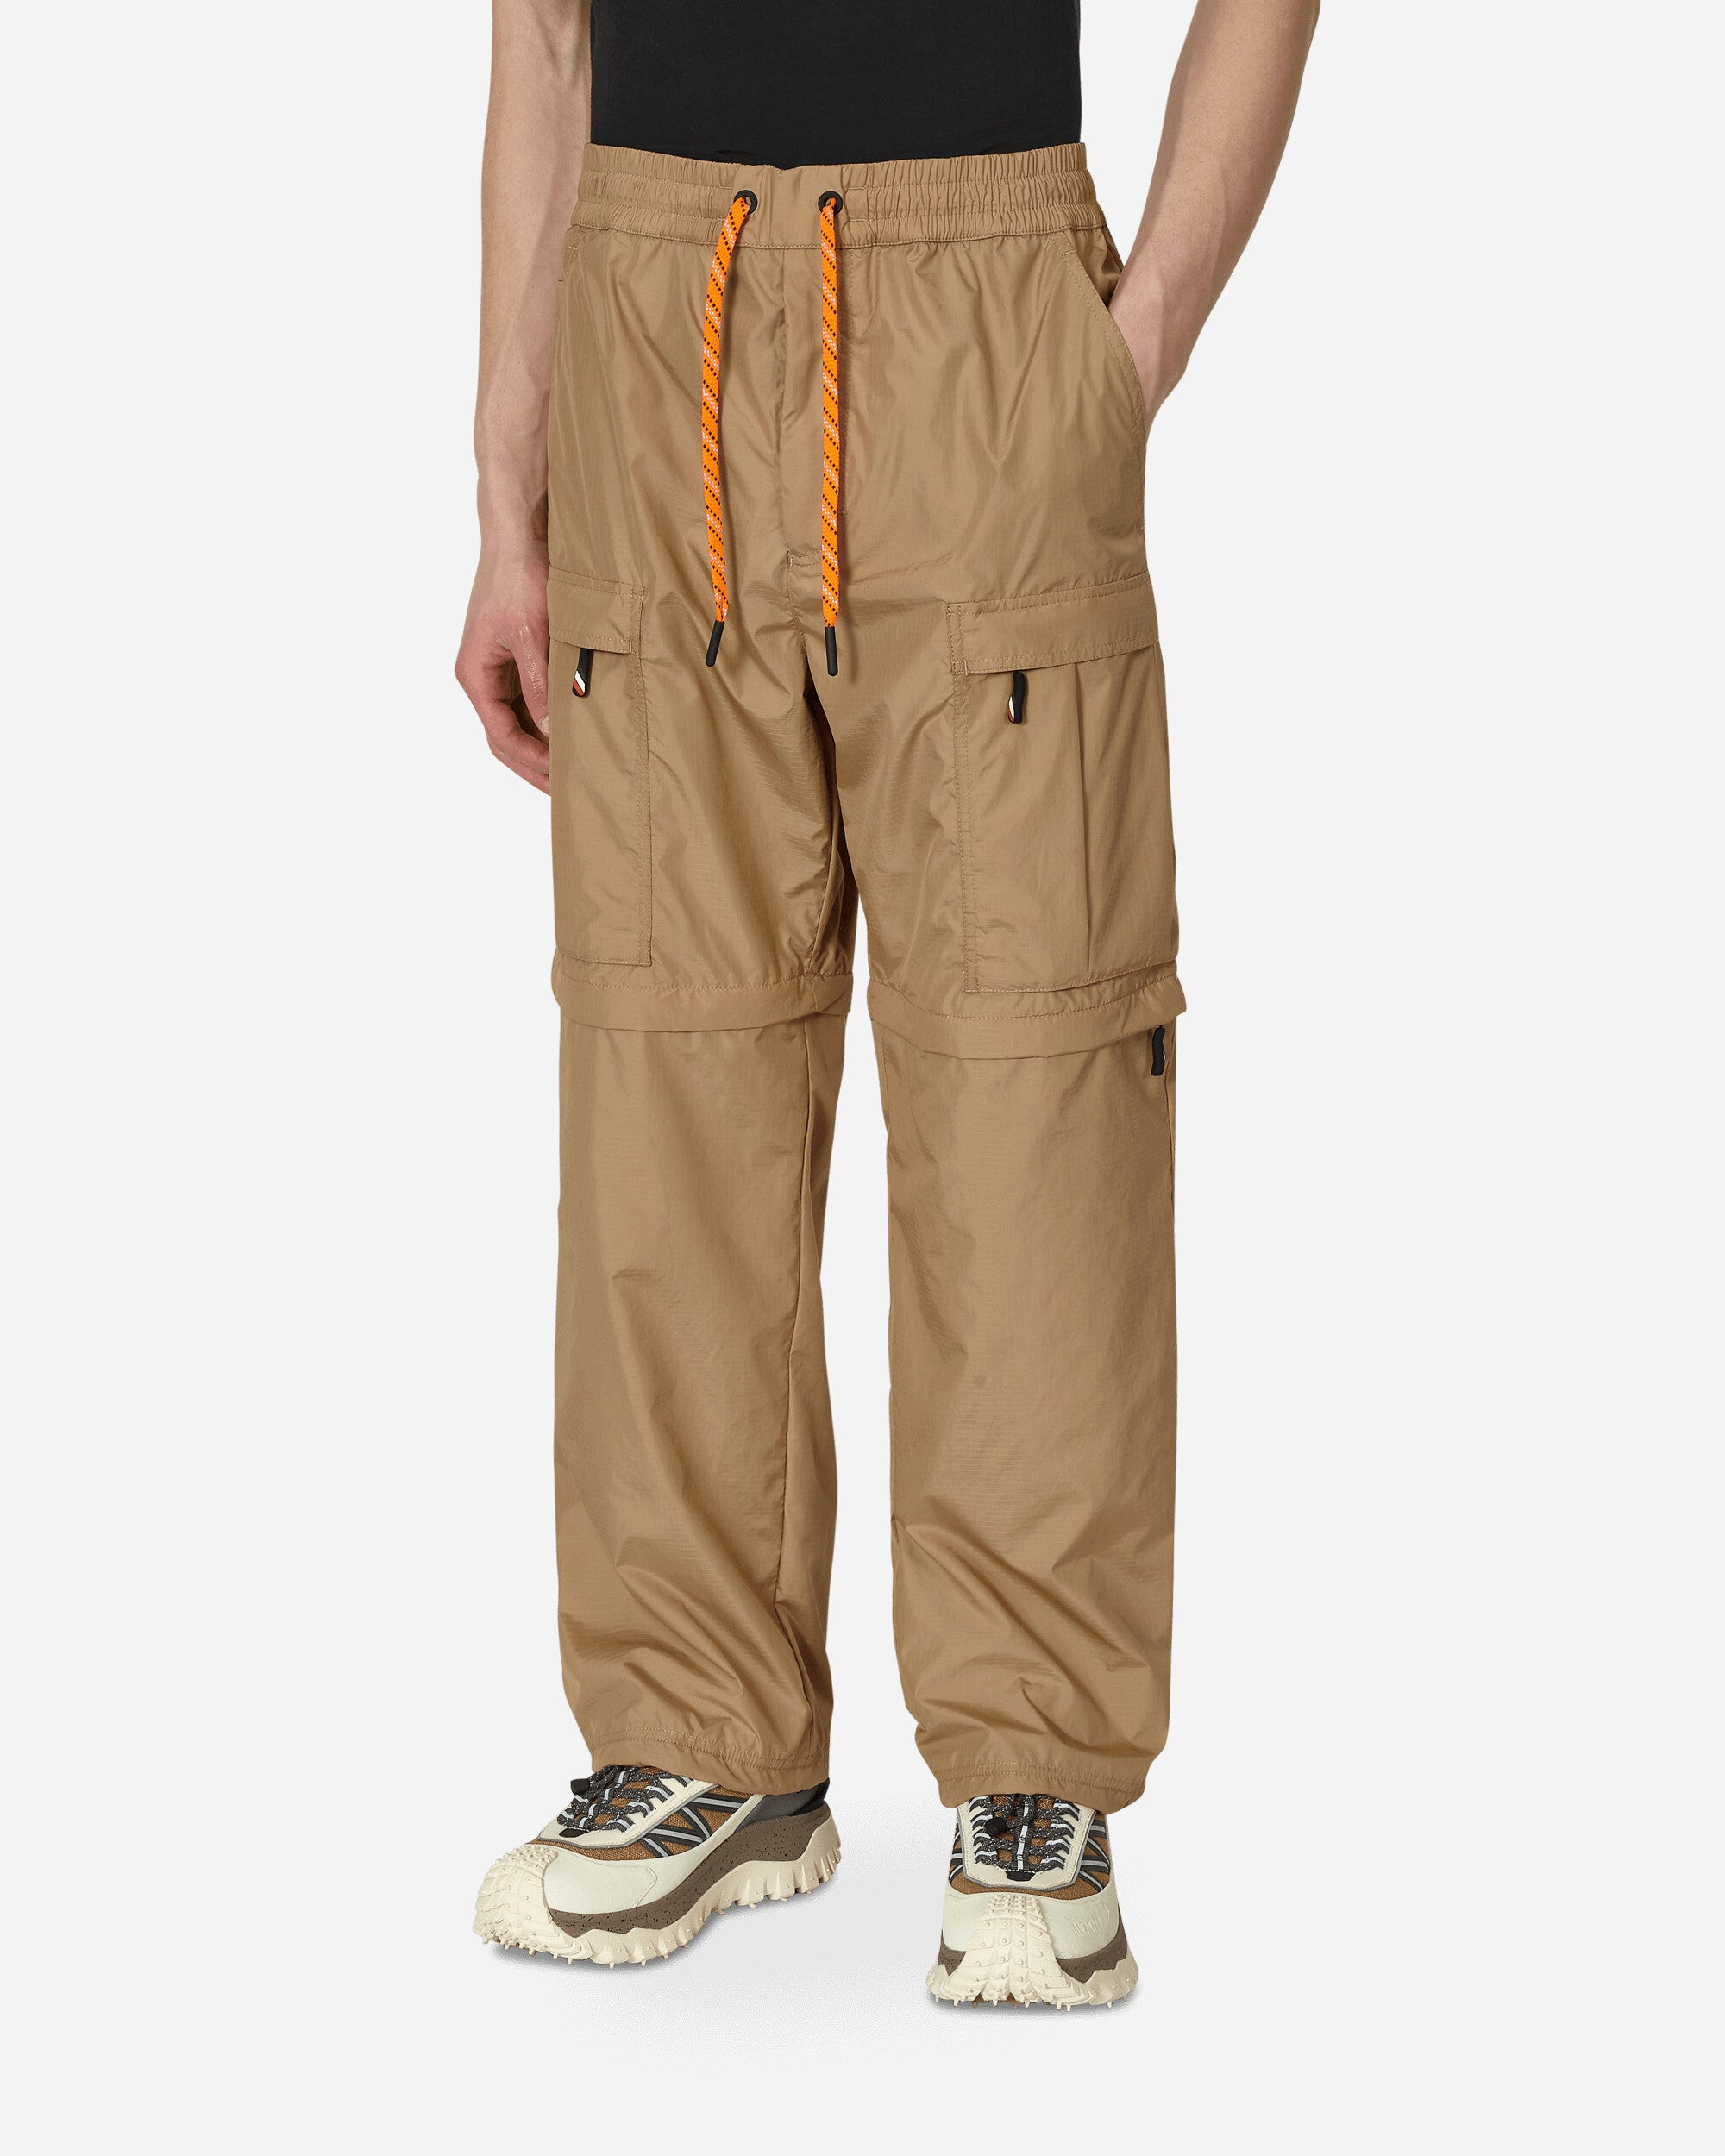 Moncler Grenoble Trousers Beige Pants Cargo 2A0000454A3E 226